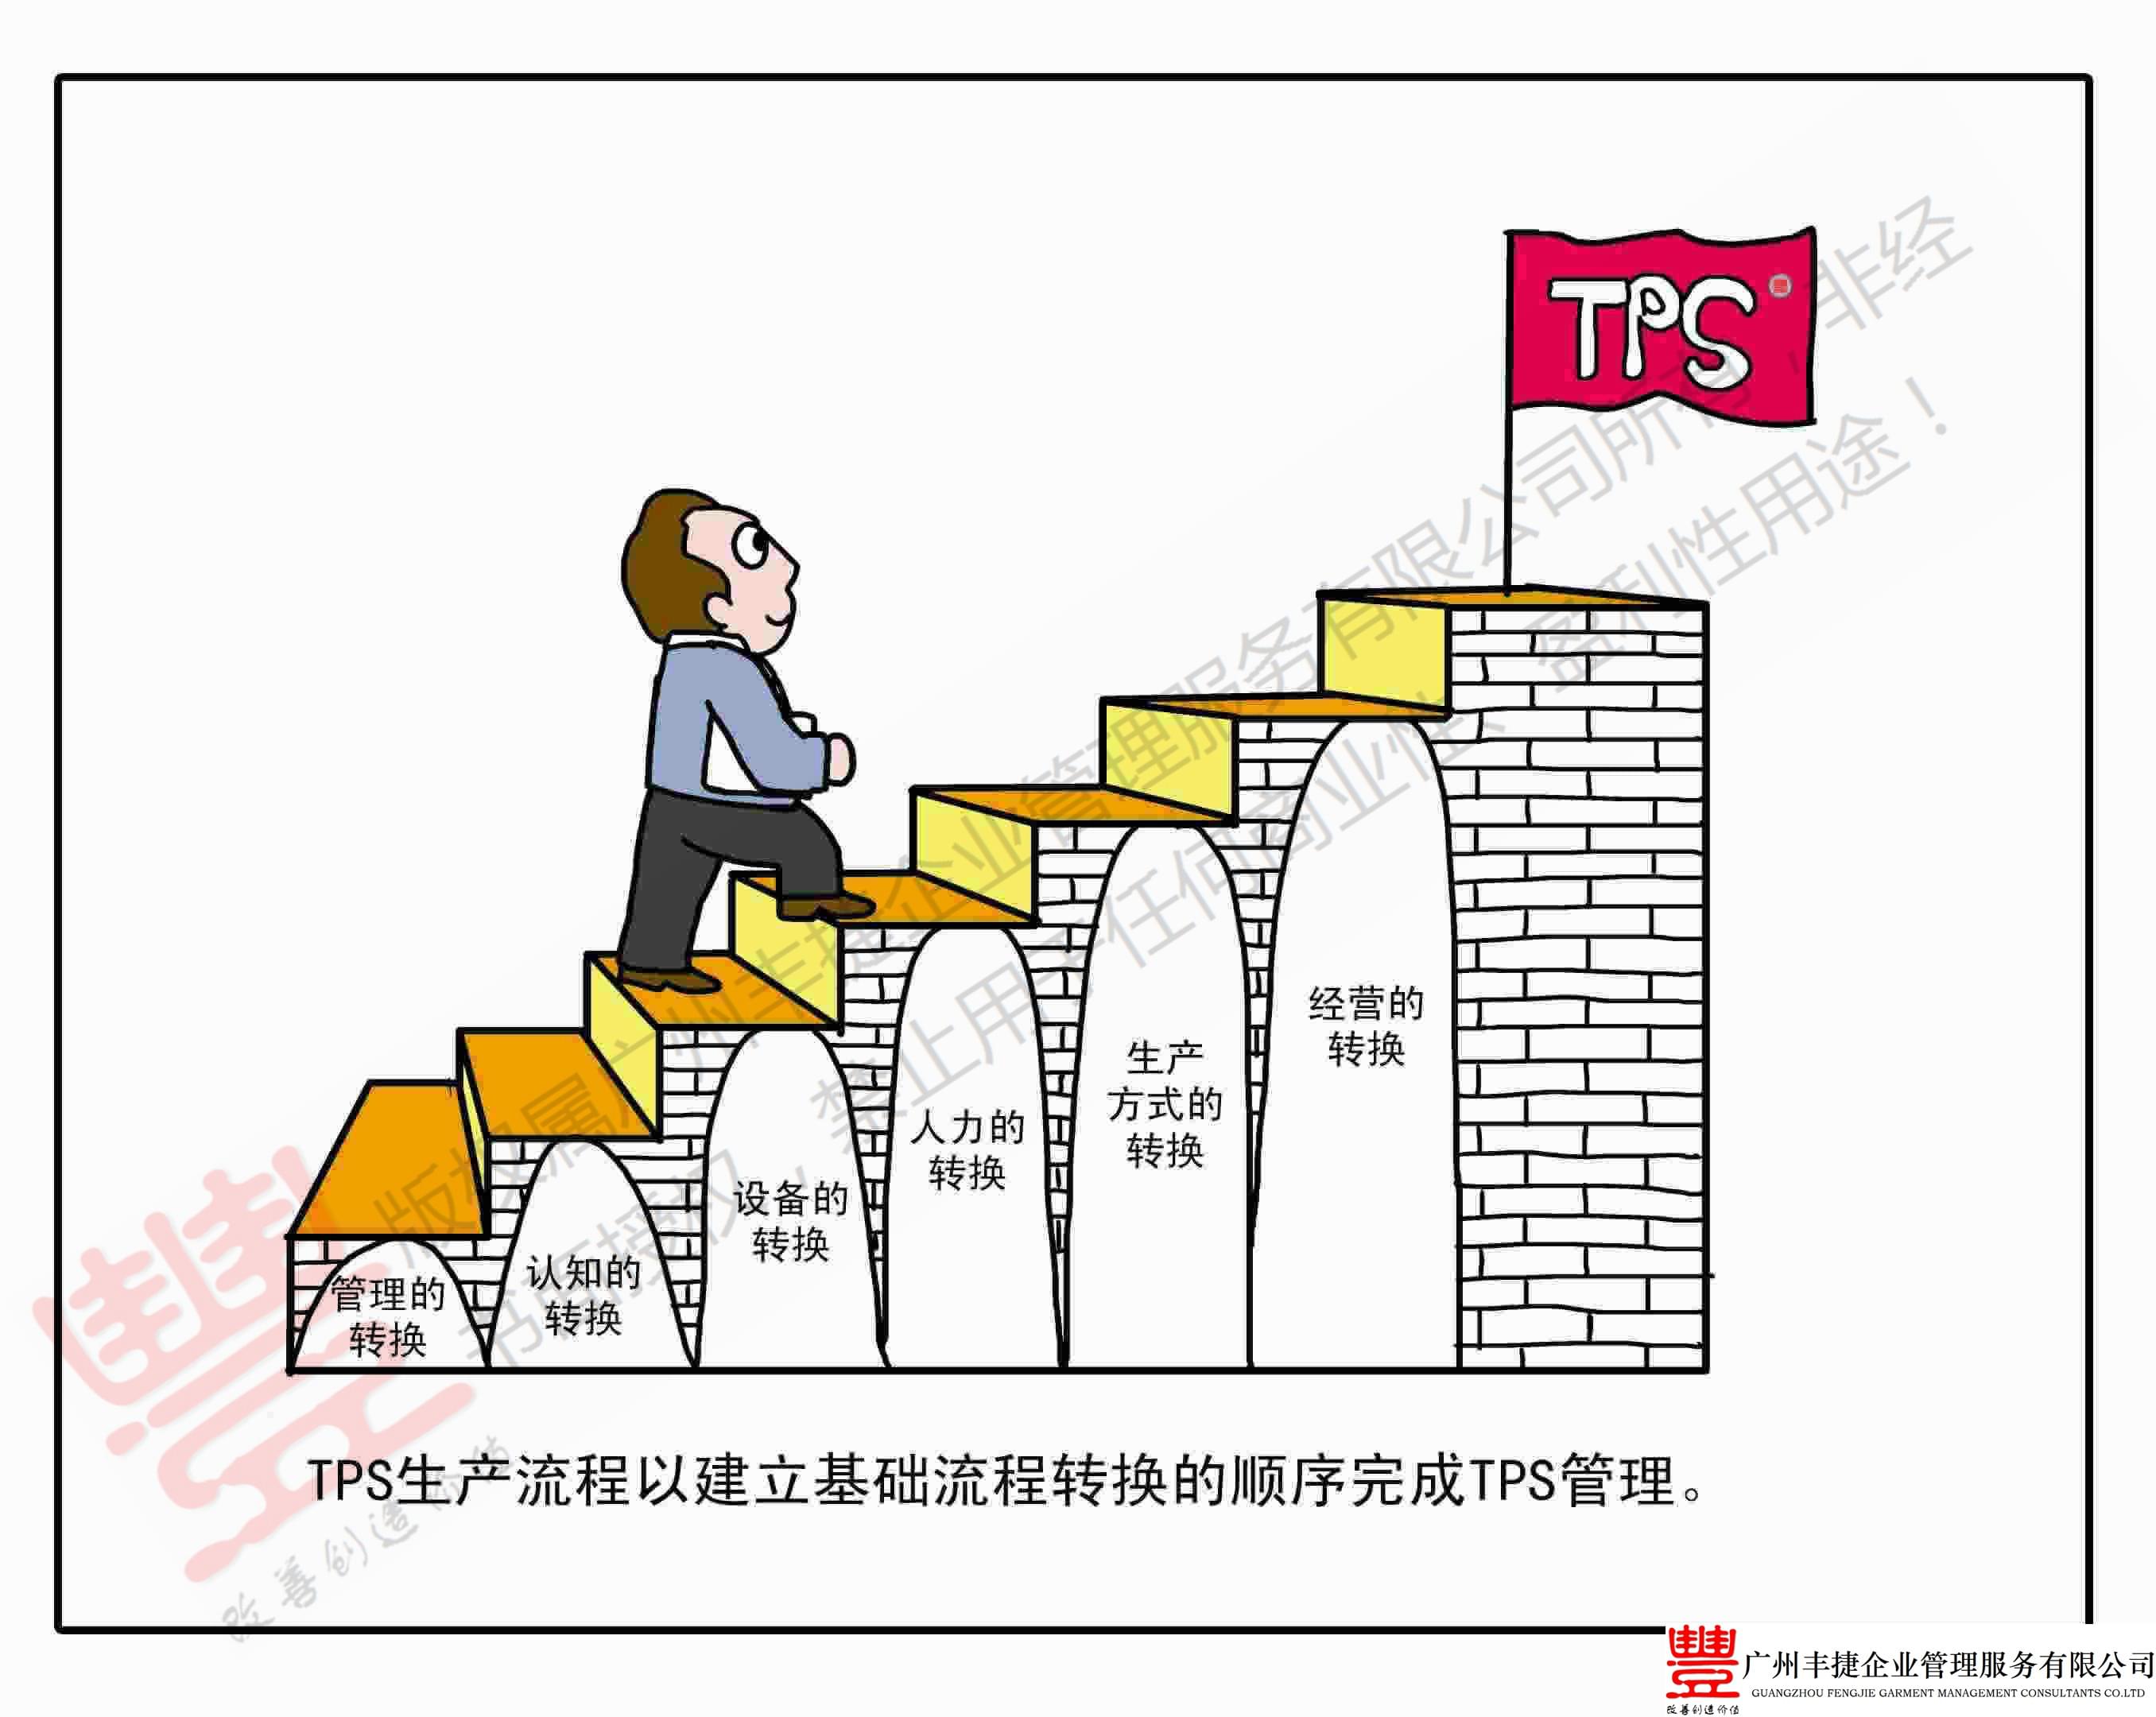 TPS生产流程,丰捷精益管理漫画,丰捷服装精益生产改善项目,广州丰捷企业管理服务有限公司